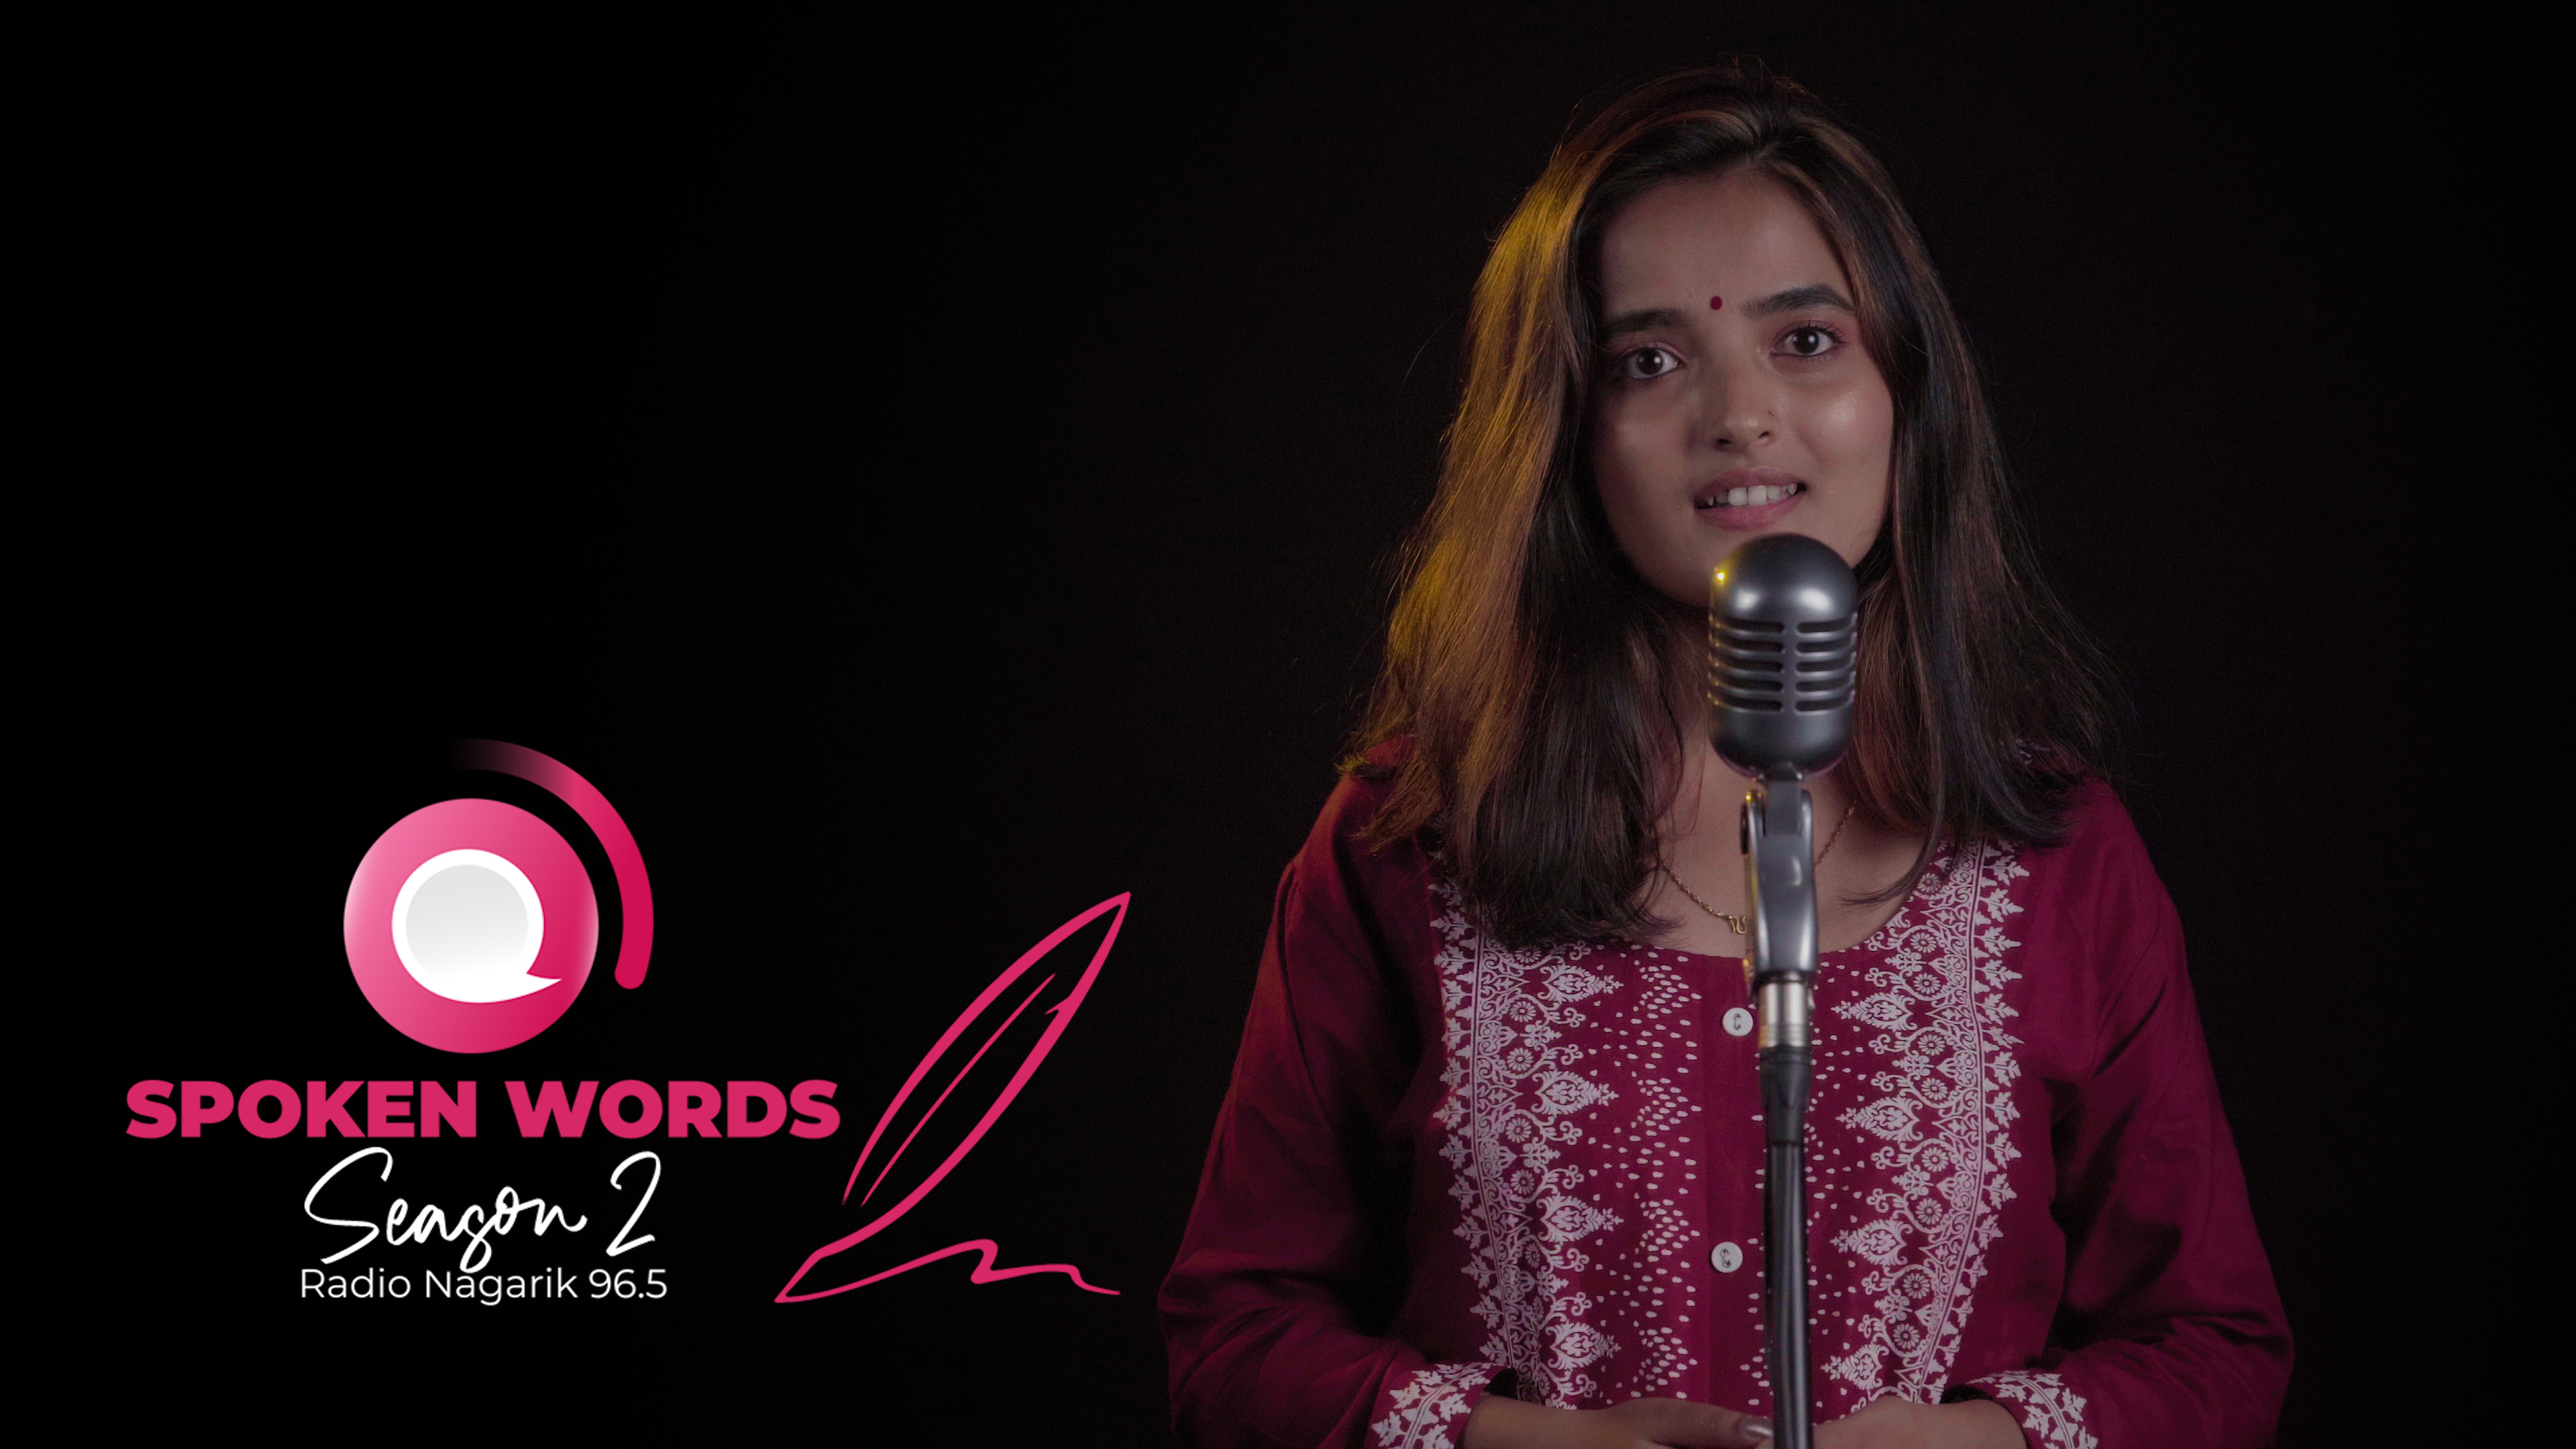 याद मेटाउने दबाइ ( Yaad metaune dabai ) - Spoken Words / Performed by Simran Karki